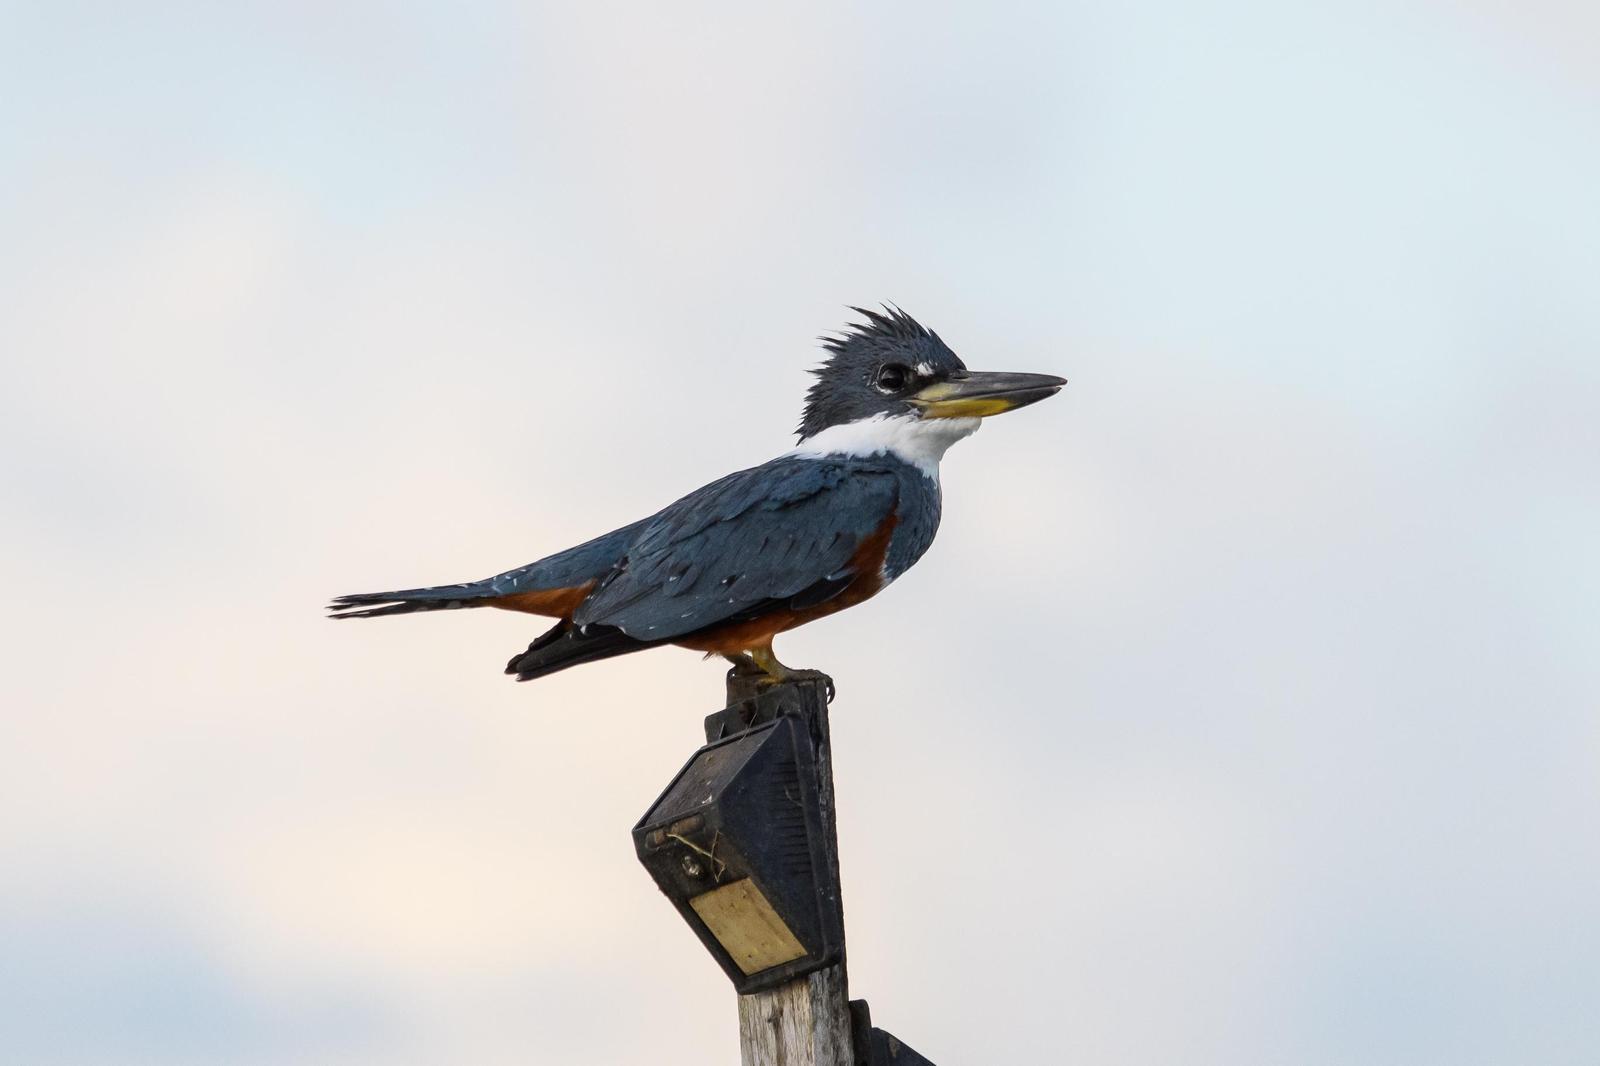 Ringed Kingfisher Photo by Gerald Hoekstra